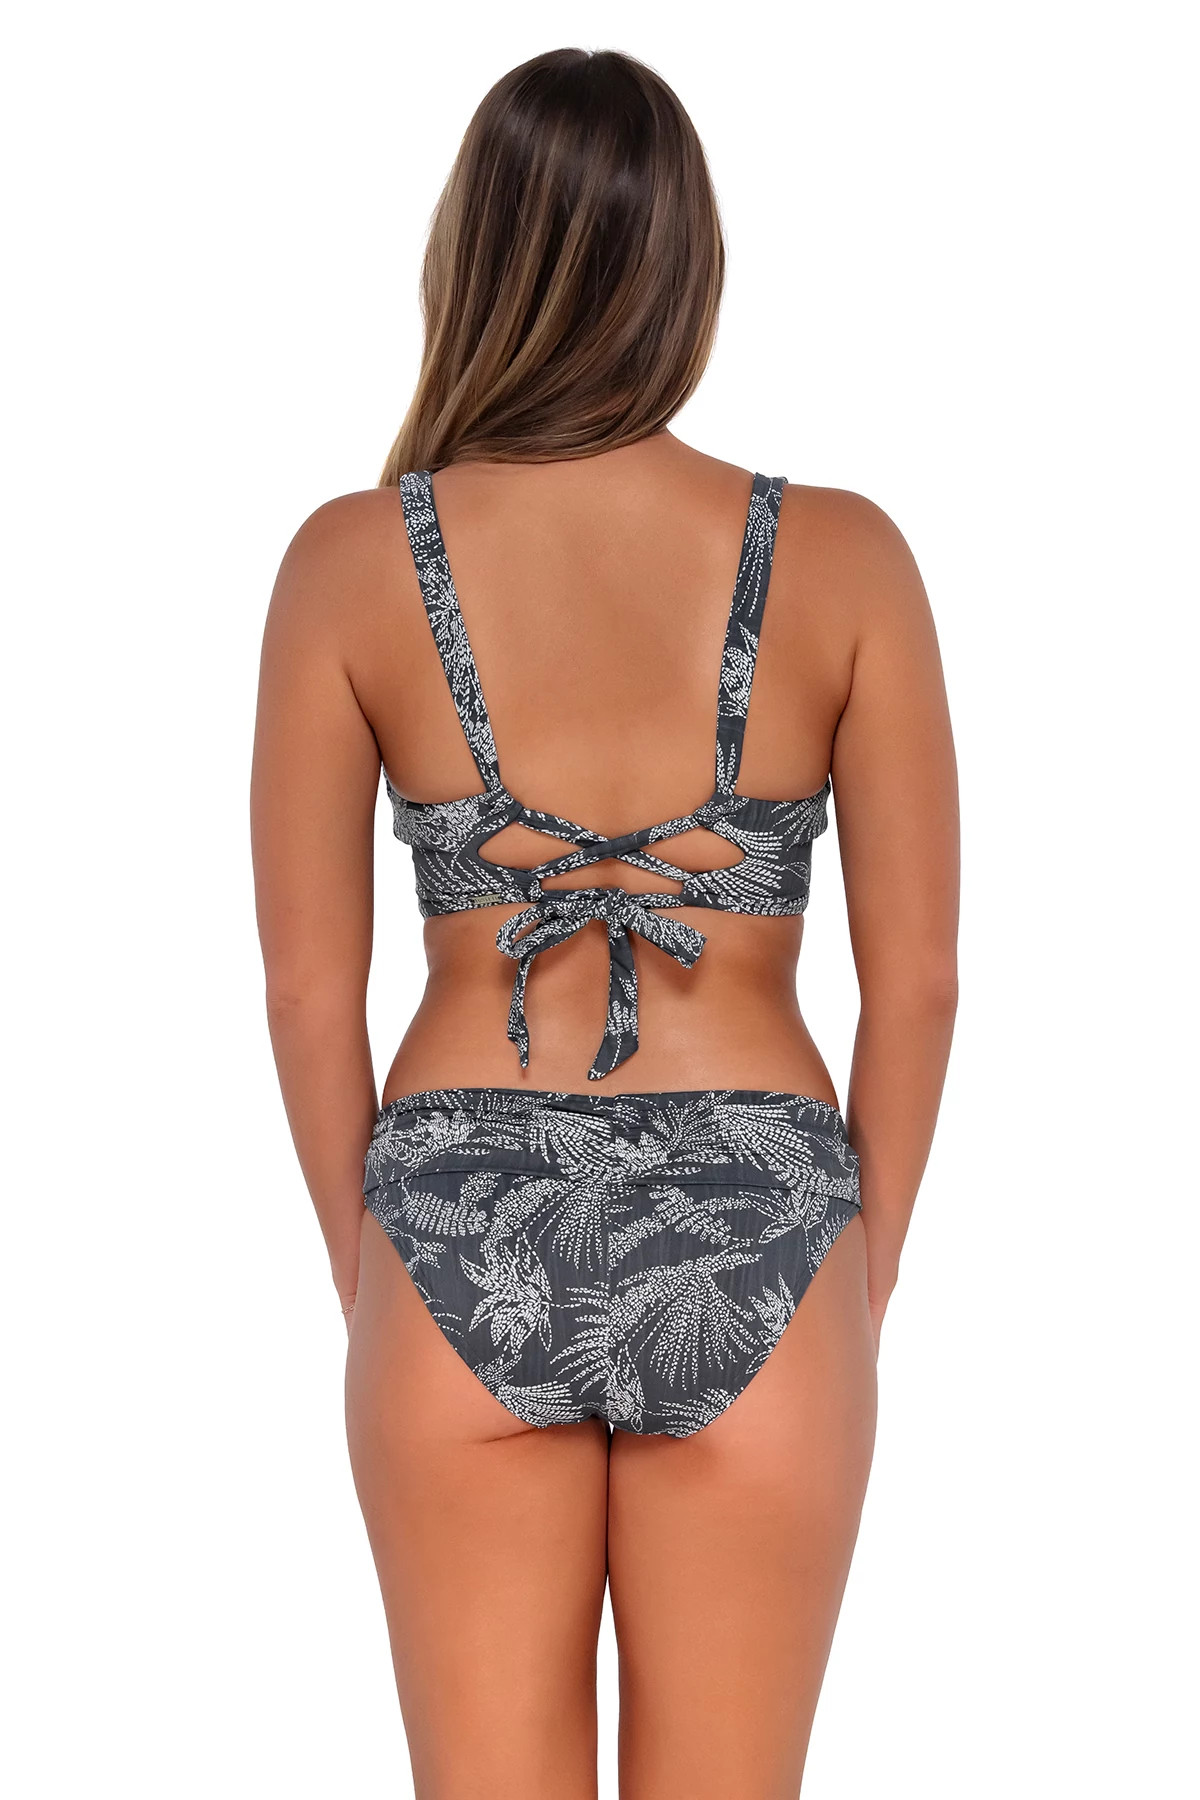 FANFARE SEAGRASS TEXTURE Elsie Underwire Bikini Top (D+ Cup) image number 2